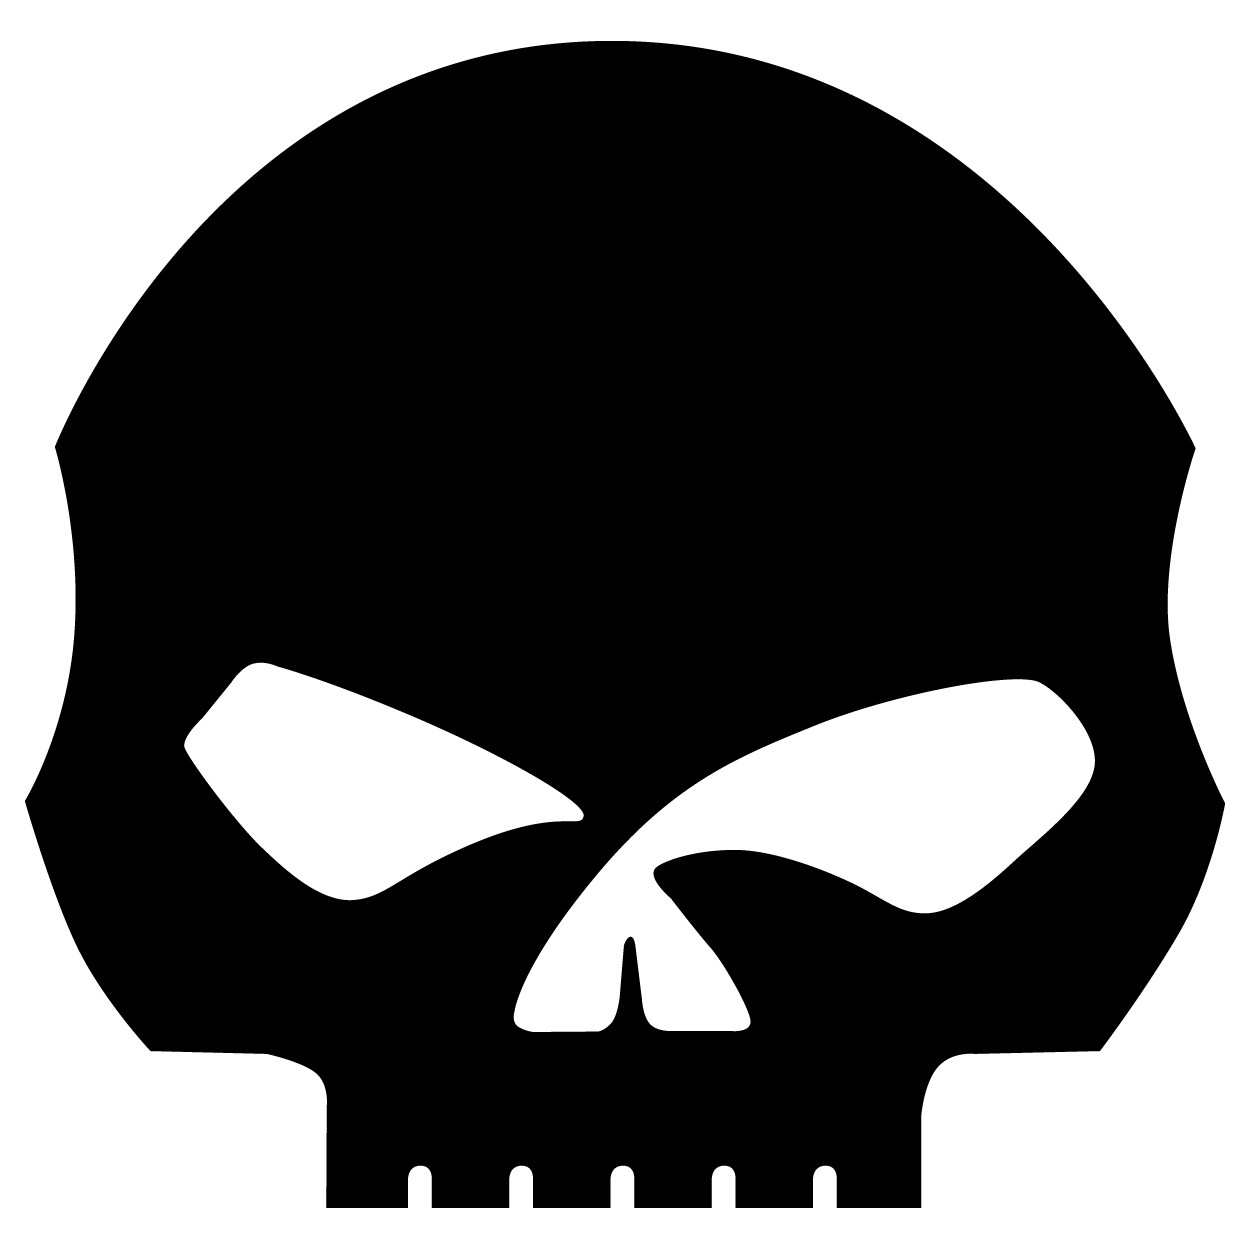 Harley Davidson Logo Silhouette Skull Decal | stickhealthcare.co.uk